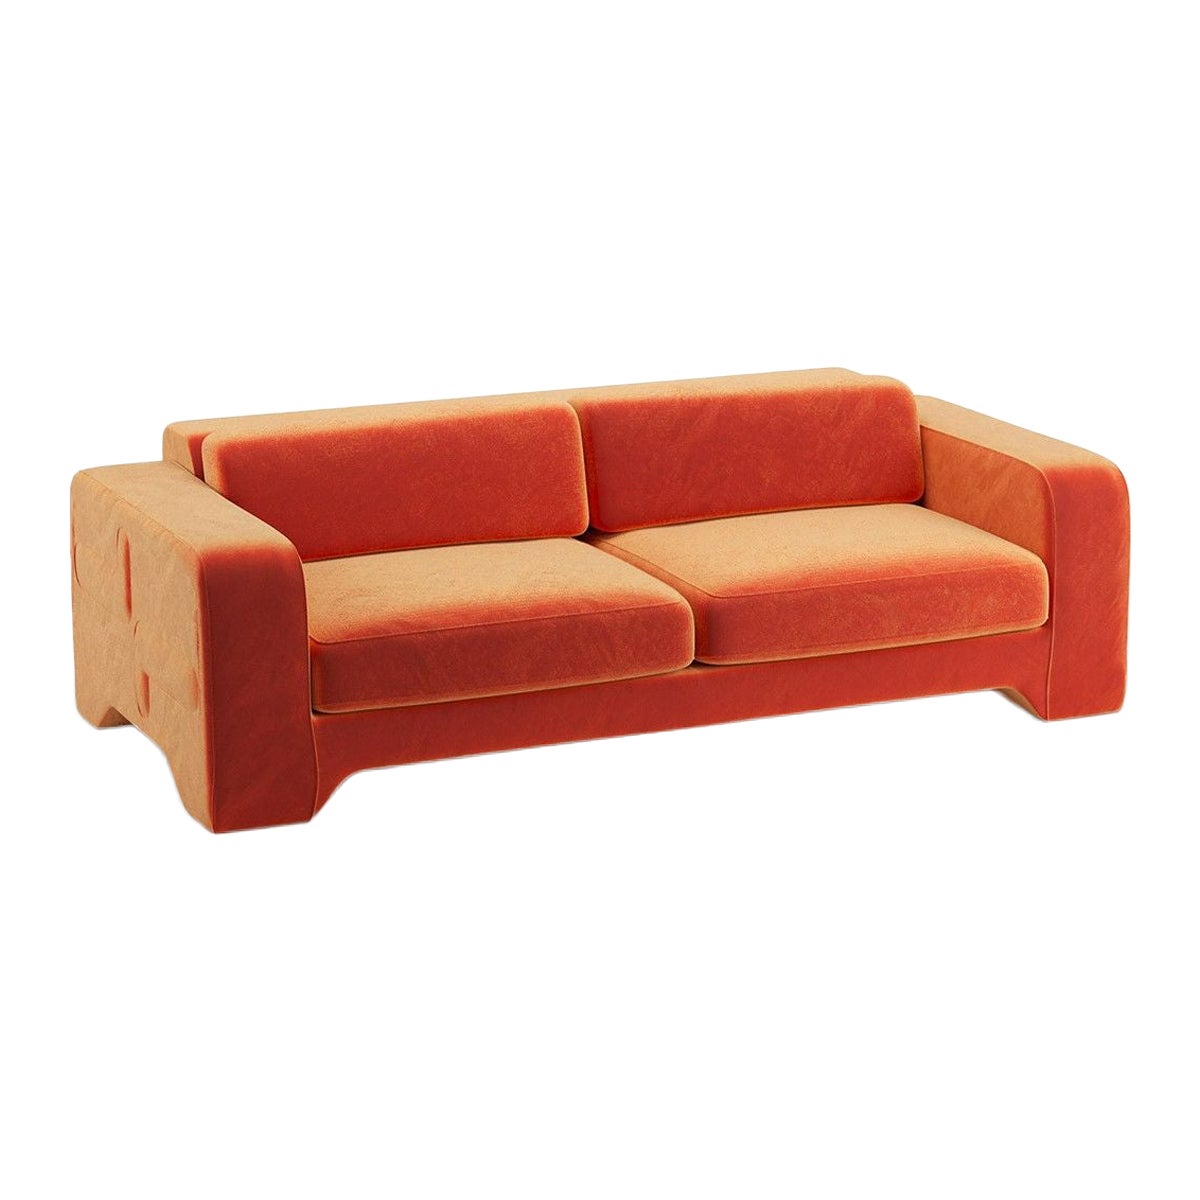 Popus Editions Giovanna 4 Seater Sofa in Orange Verone Velvet Upholstery For Sale